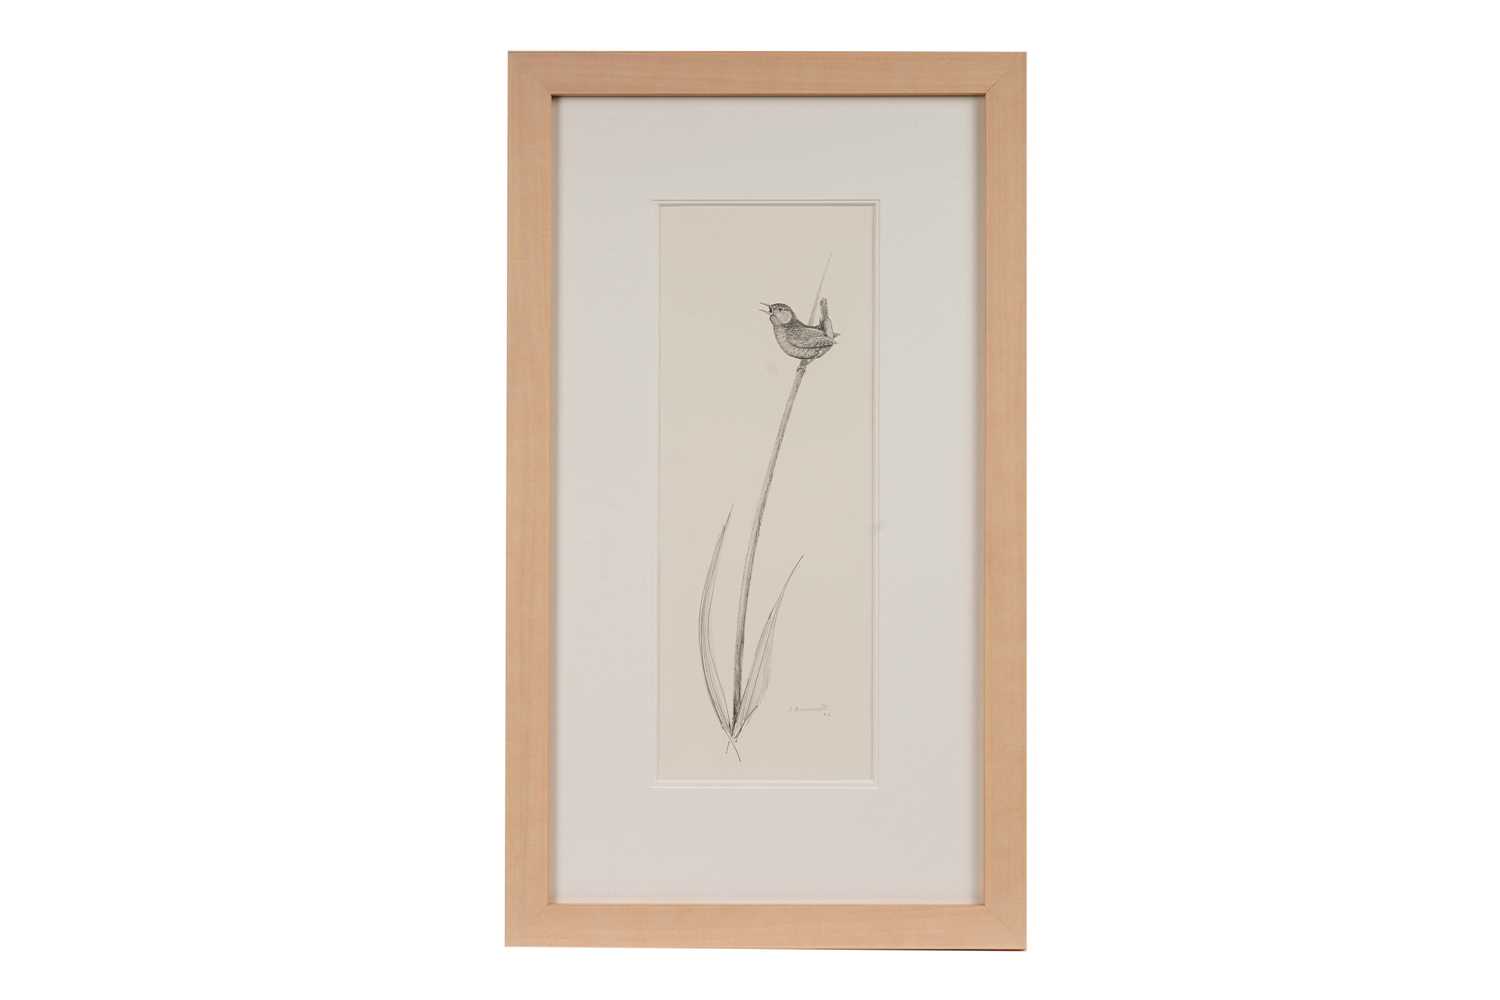 Ian Greensitt - Wren on a Reed | pencil